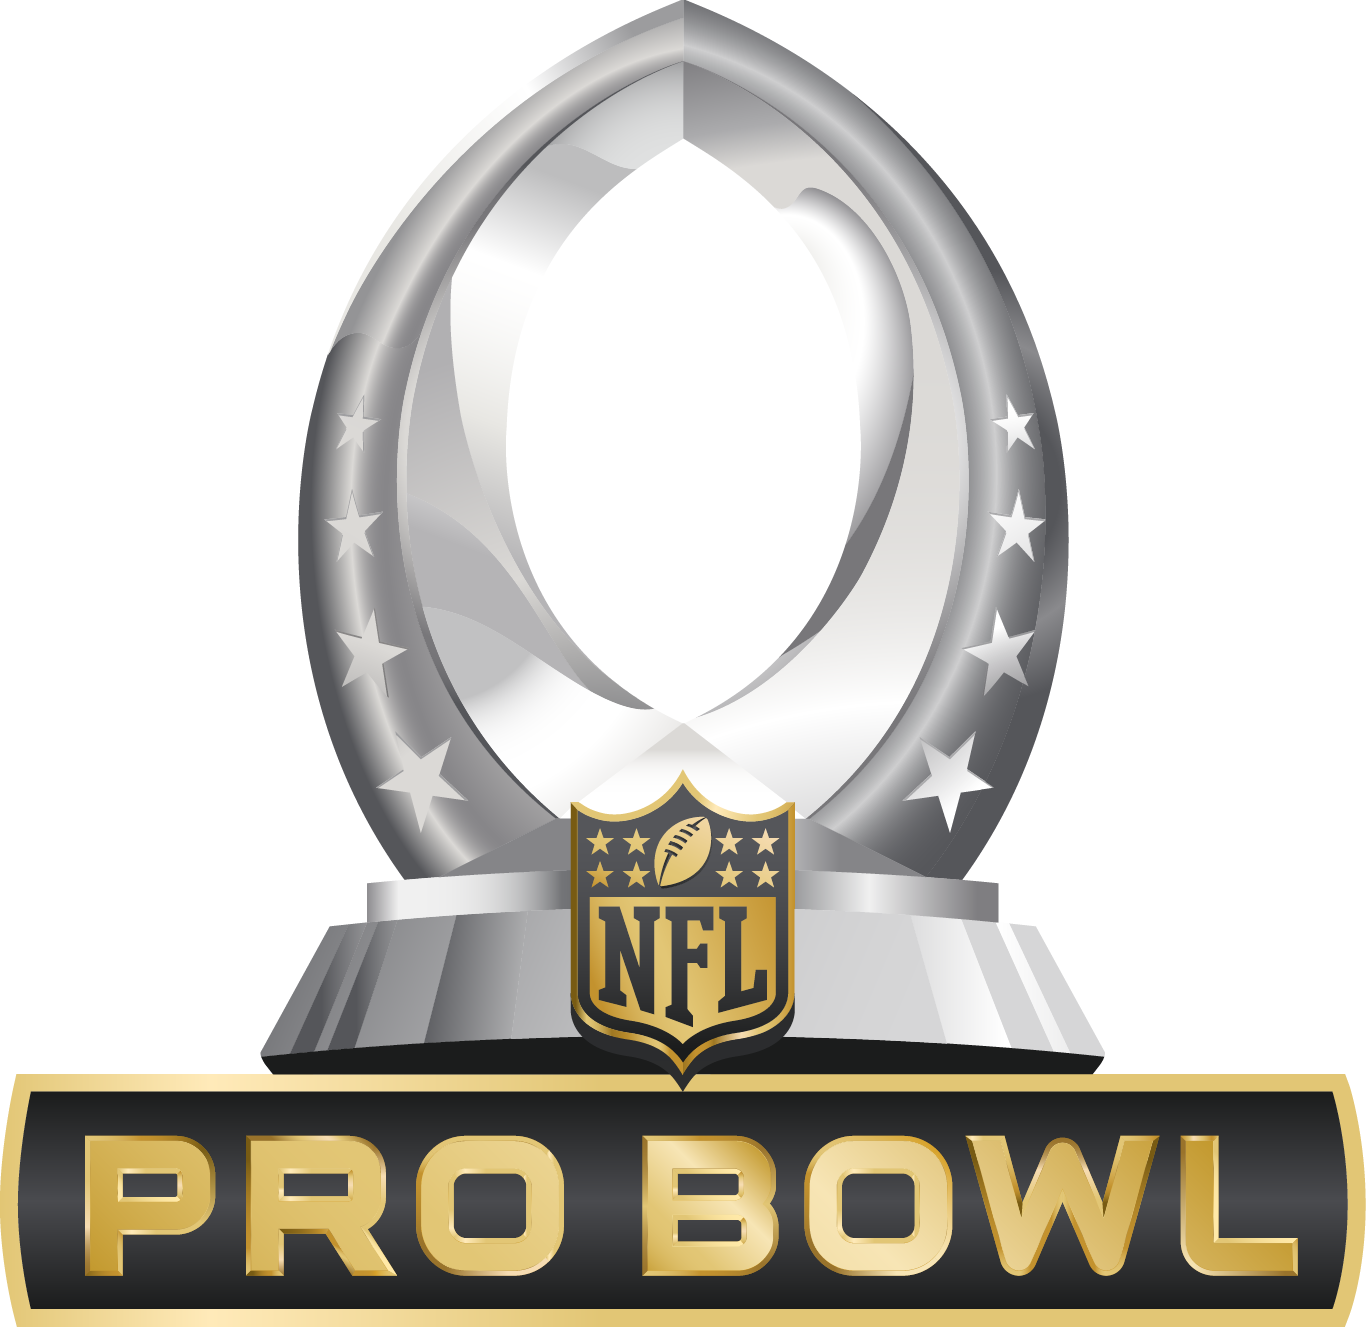 Nfl Pro Bowl, Camping World Stadium, Orlando, Florida - Pro Bowl 2019 Png Clipart (1366x1327), Png Download